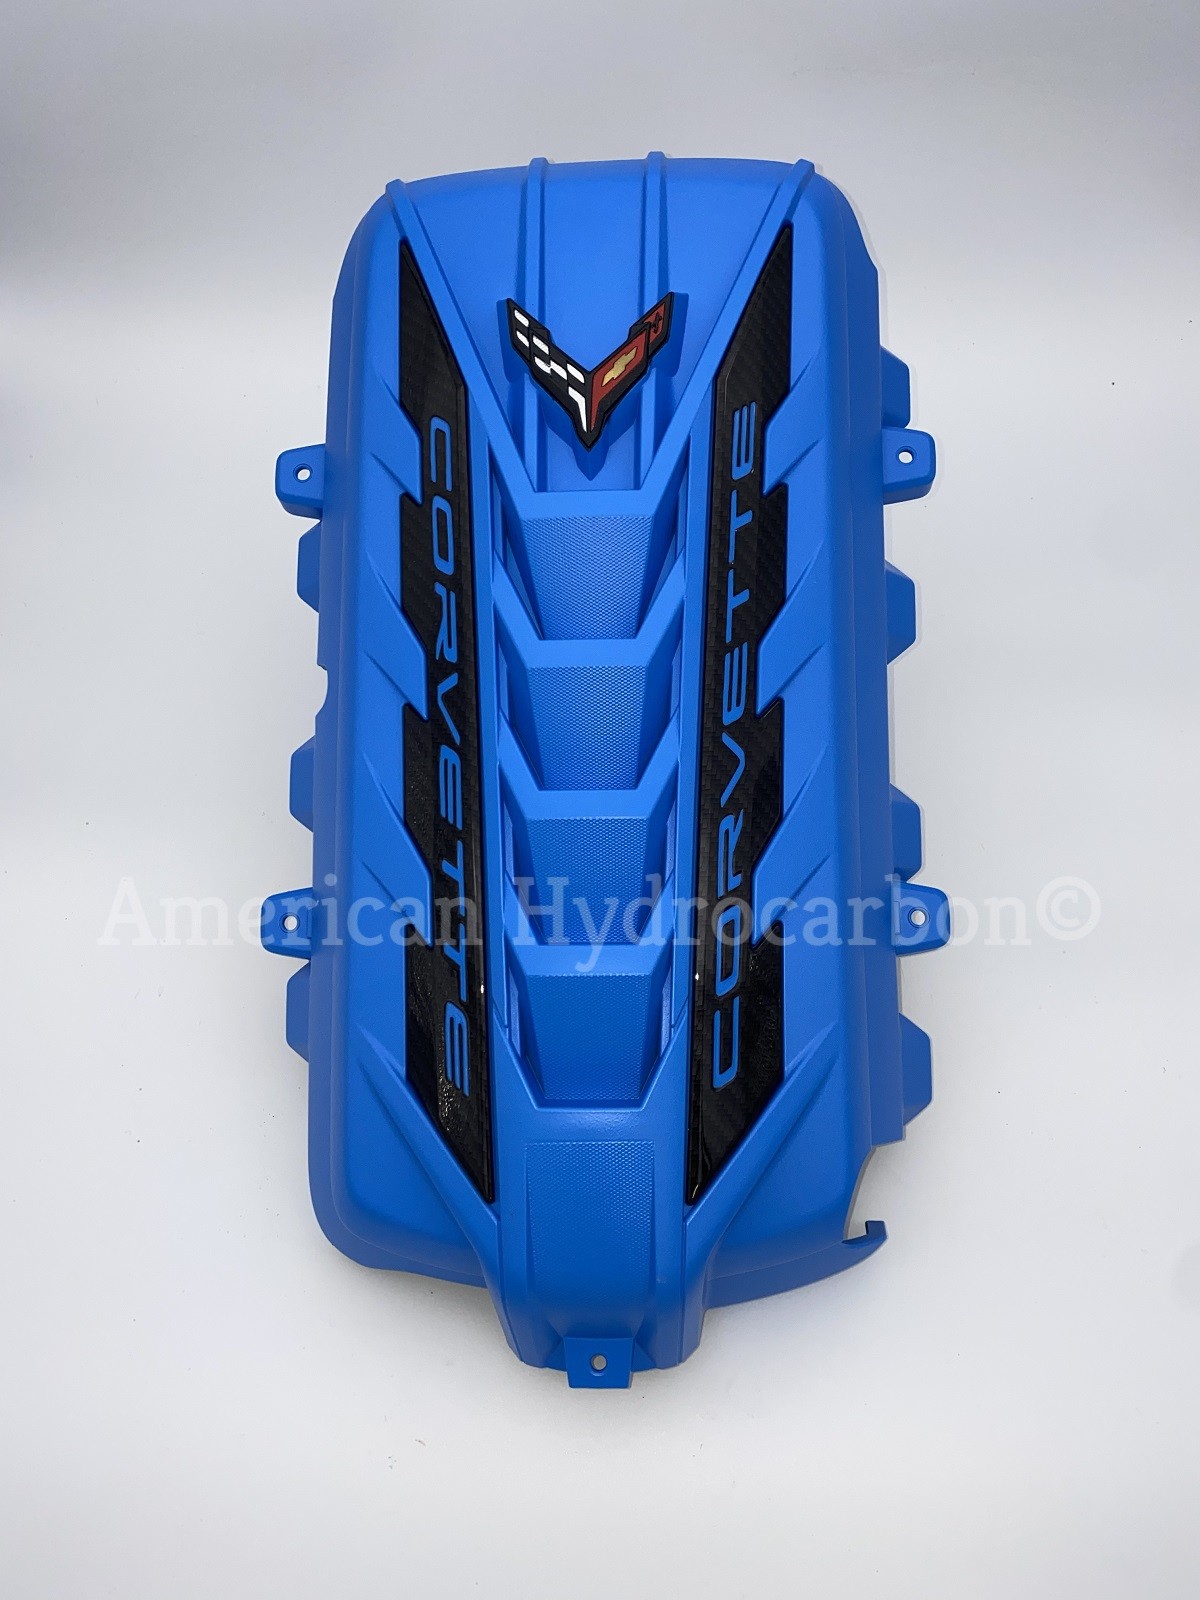 Rapid Blue C8 Corvette Engine Cover by American Hydrocarbon